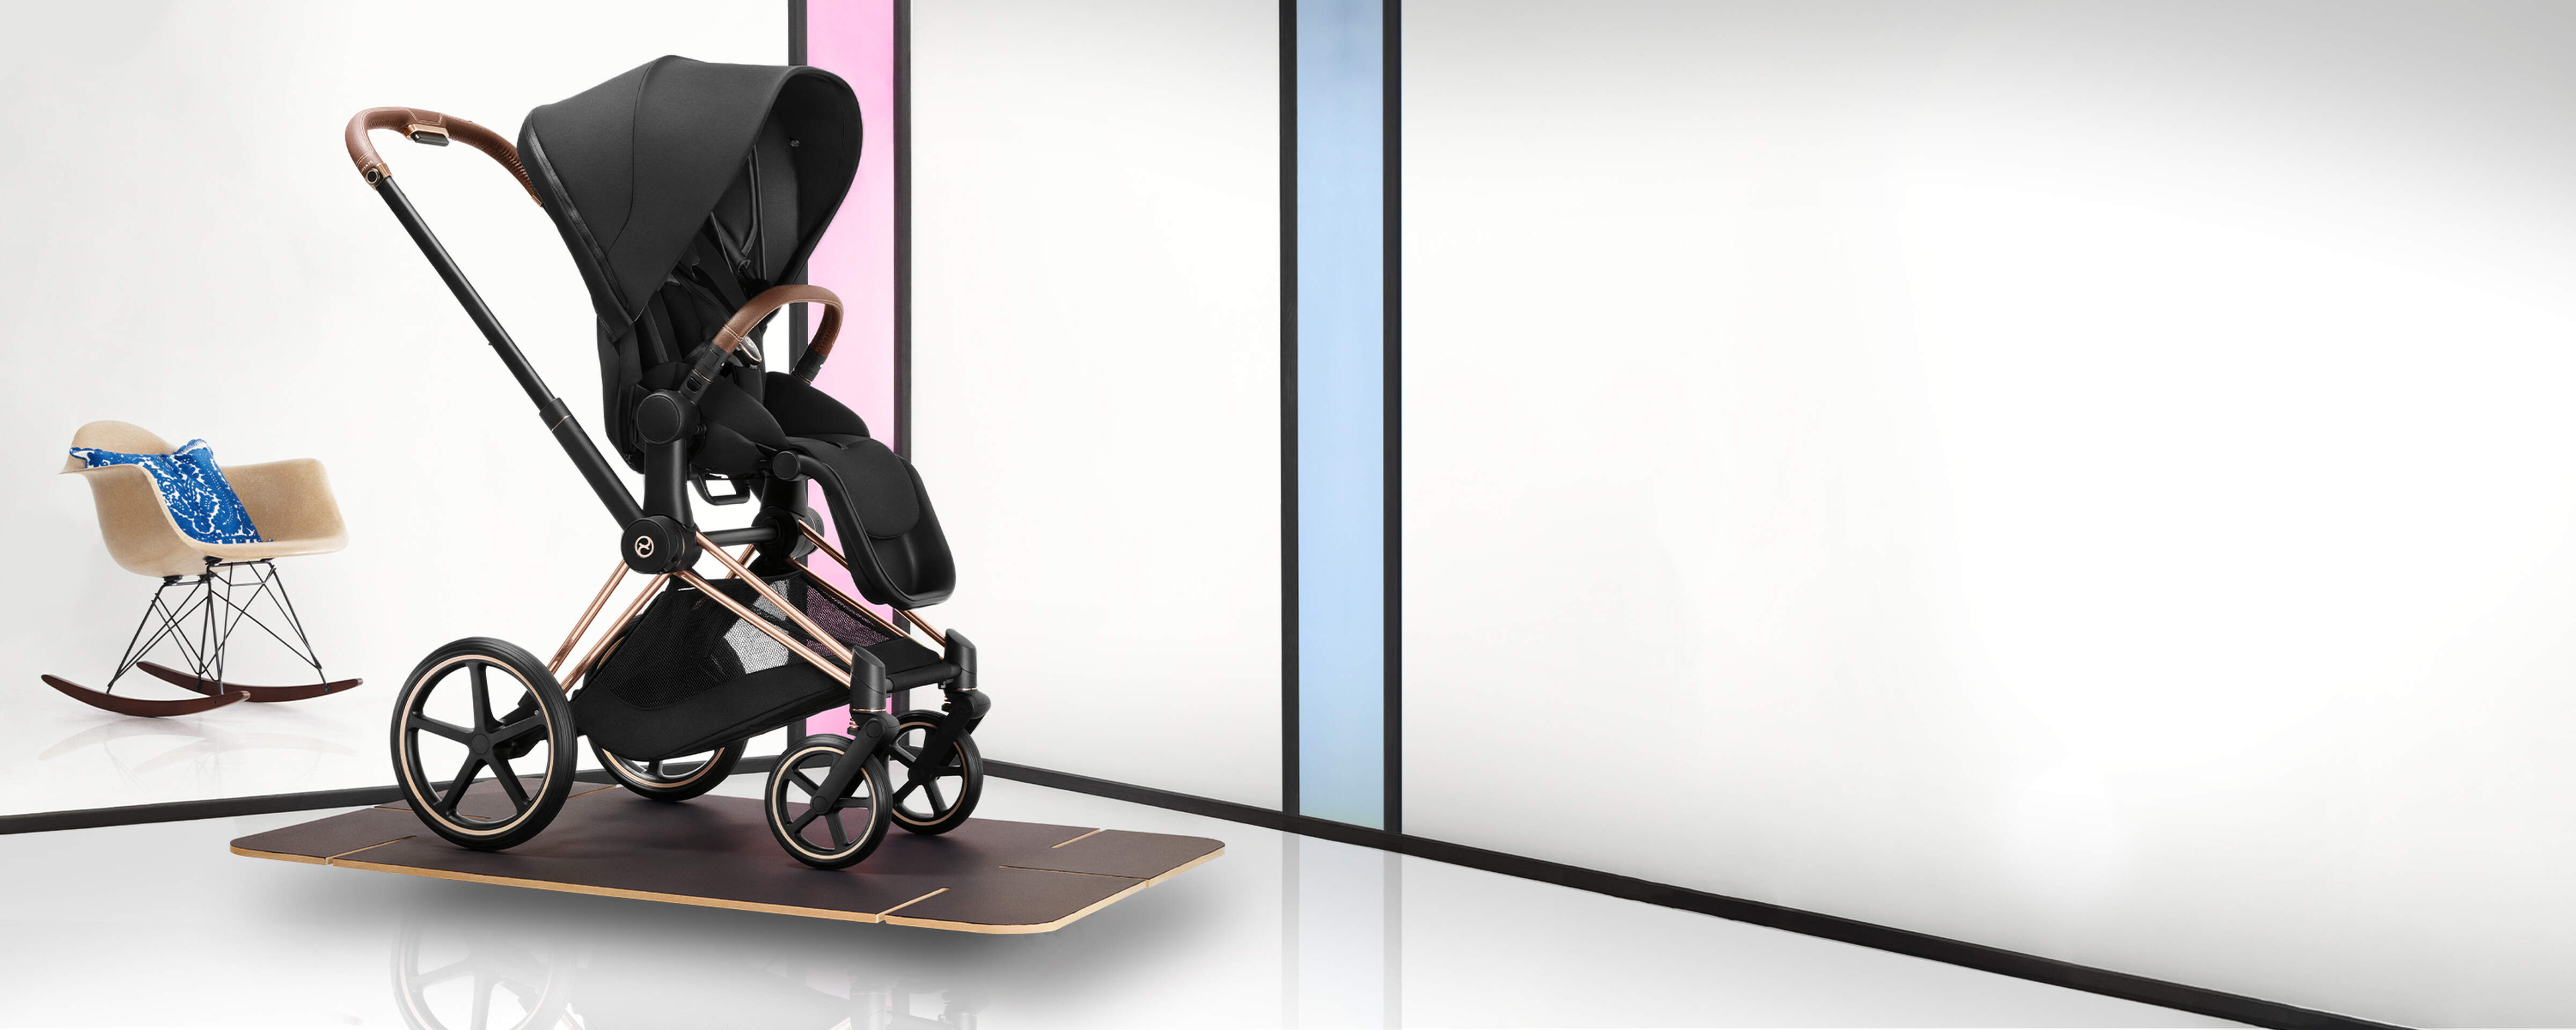 CYBEX Platinum barnvagnar – Den nya generationen